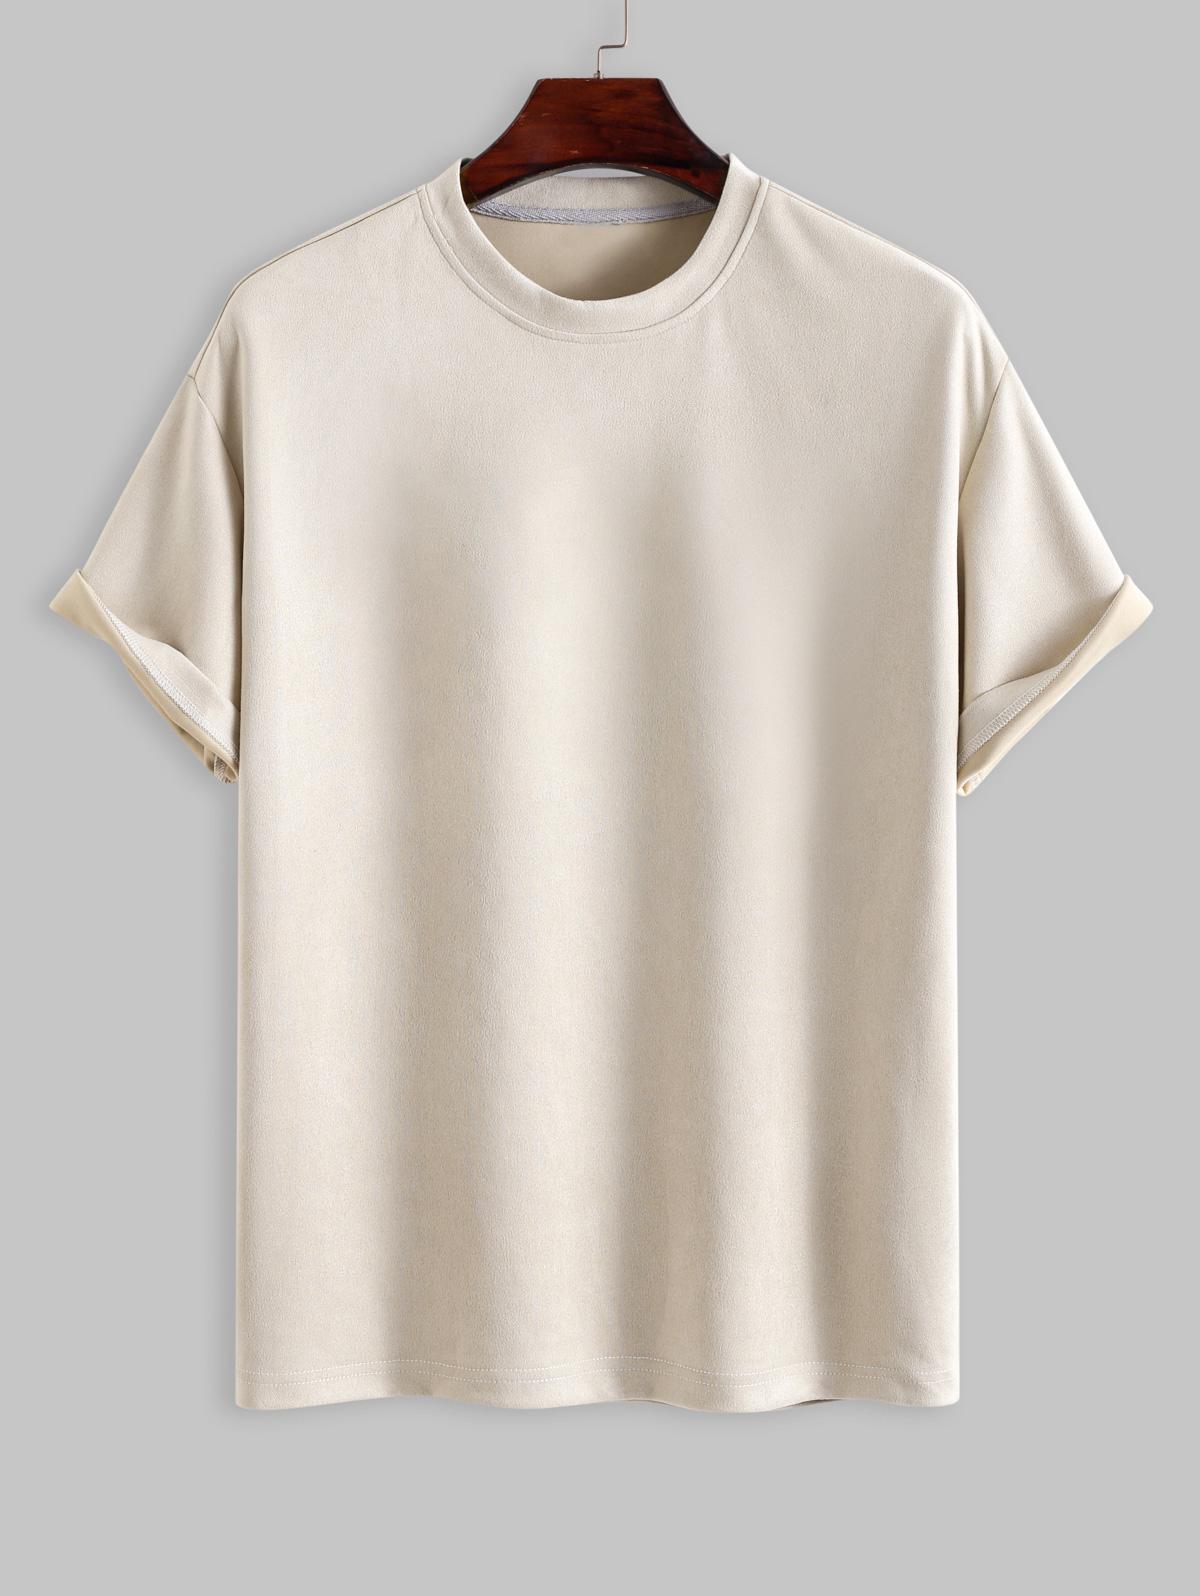 ZAFUL Men's Retro Faux Suede Fabric Plain Short Sleeves T Shirt L Light coffee